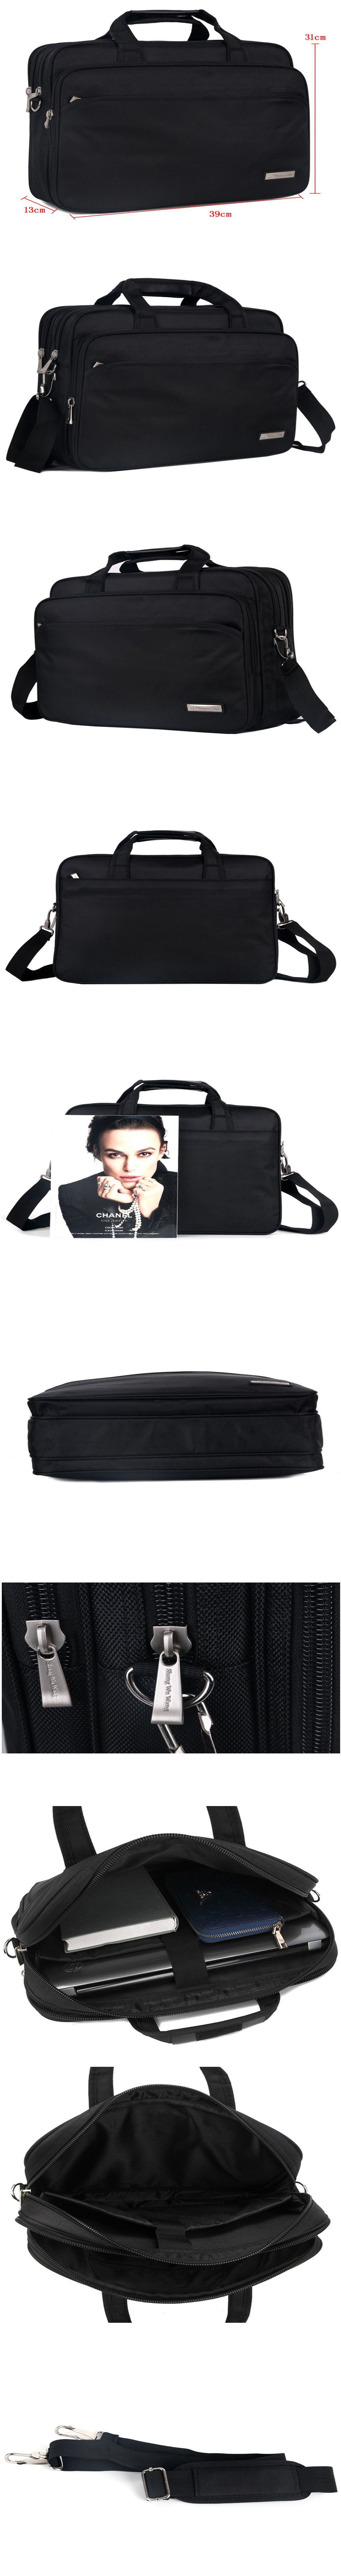 14-inch-Oxford-Briefcase-Business-Laptop-Bag-Waterproof-Portable-Messengers-Bag-Shoulder-carrying-Mu-1414974